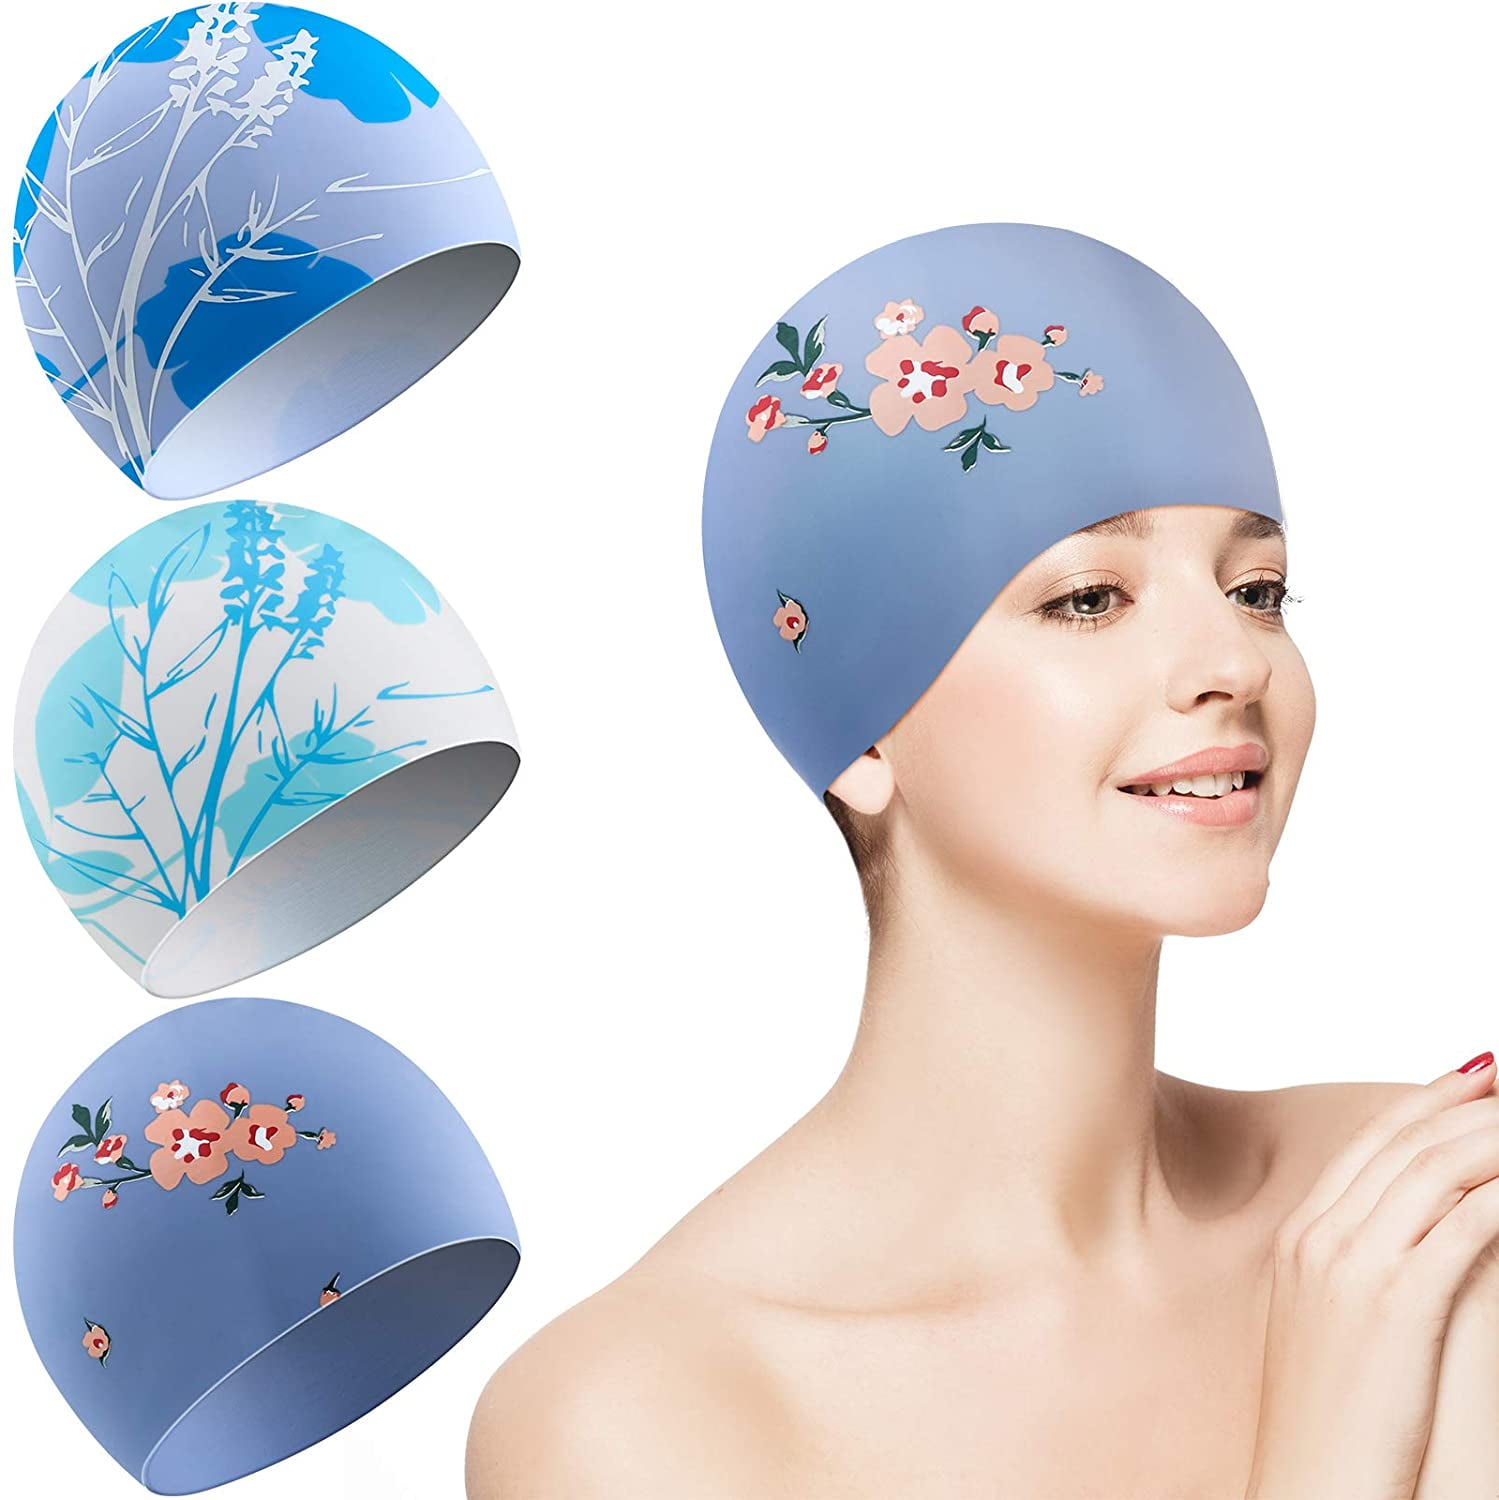 Flexible Fabric Protect Ears Adult Bathing Caps Swim Hat Pool Swimming Cap 